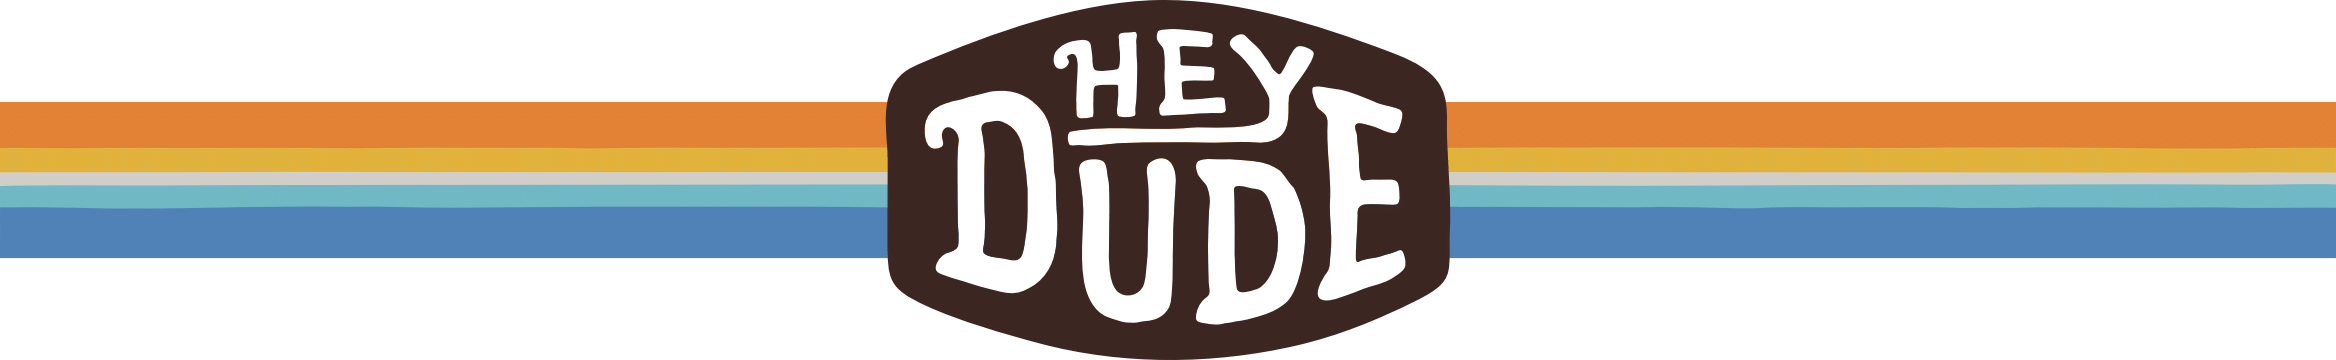 Hey Dude Shoes_logo